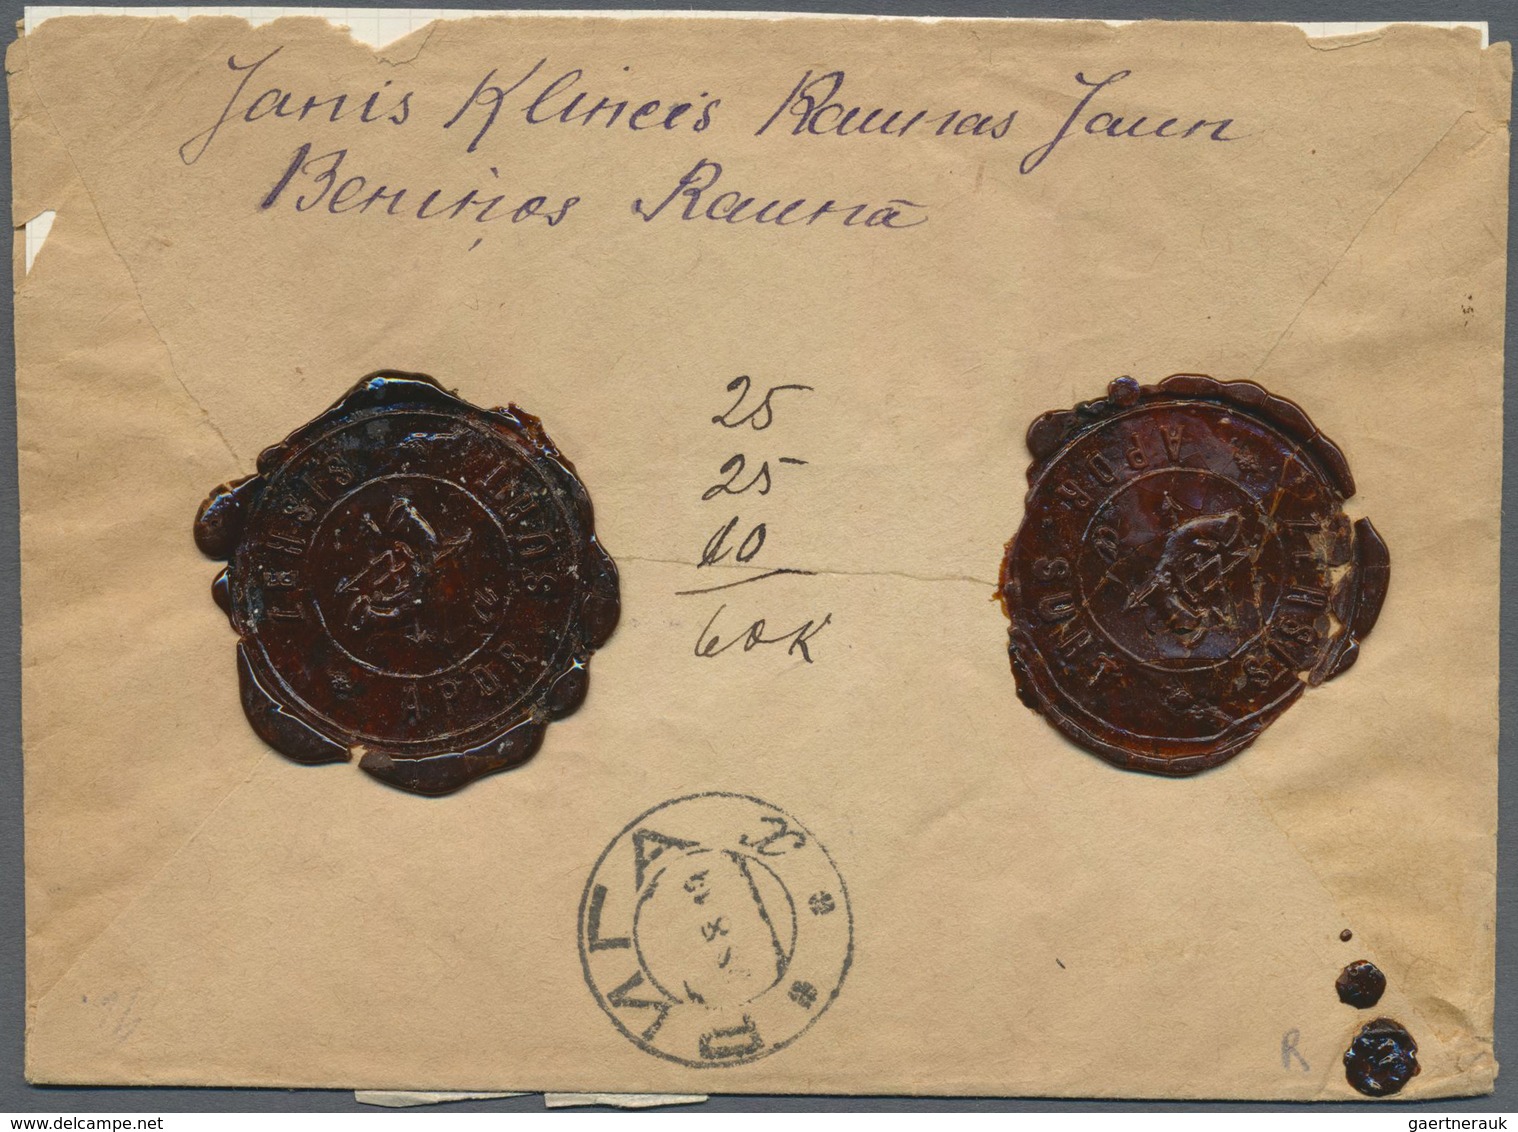 Br Lettland: 1919, 10kop. Light Blue Imperf., Six Copies On Insured Letter 5rbl./10gr., Oblit. By Penst - Letland